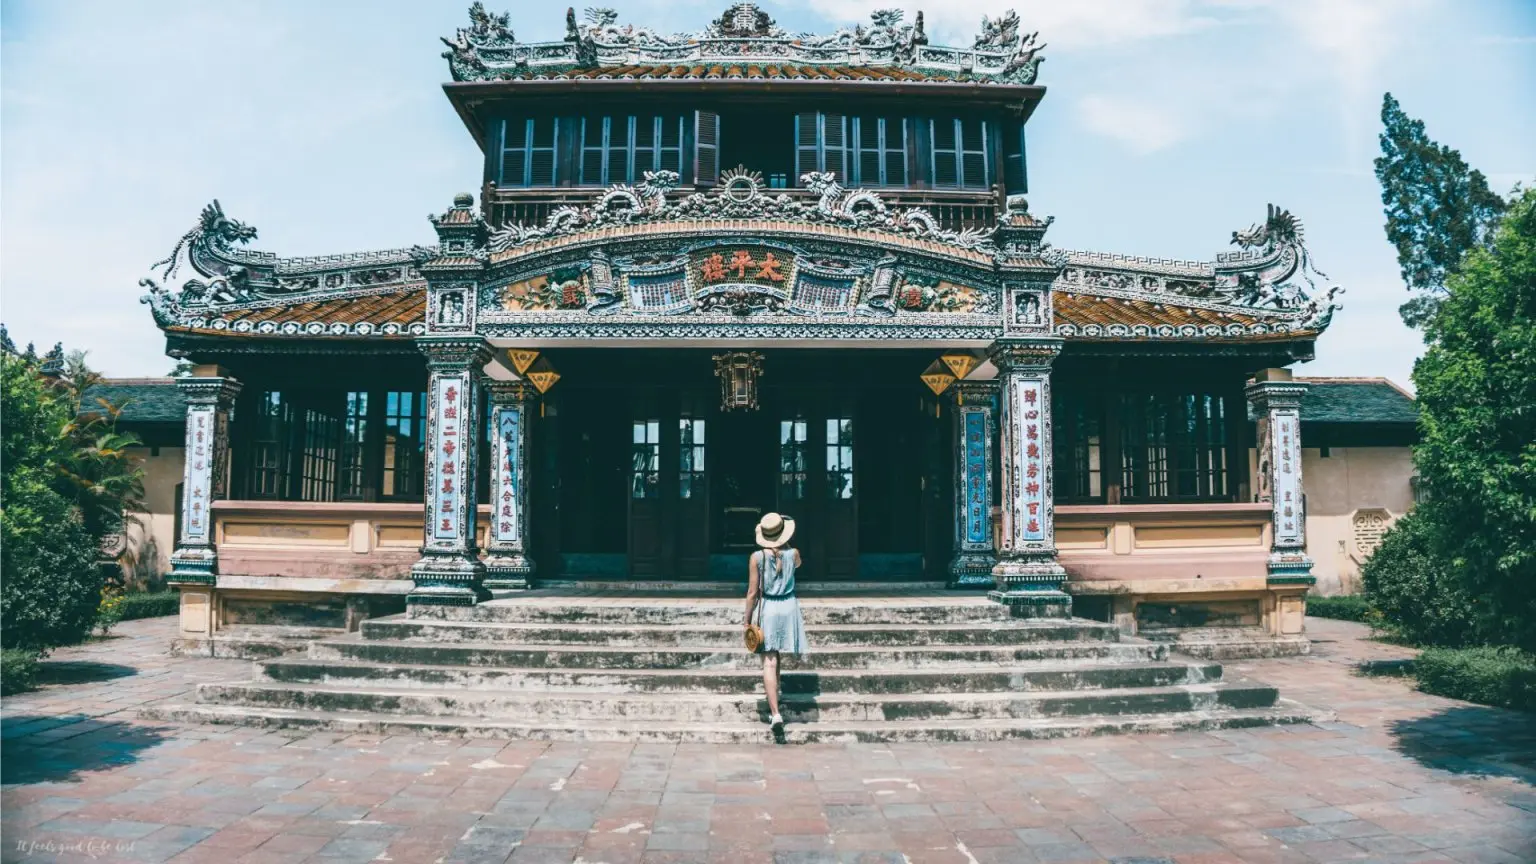 Iga in a massive temple in Hue